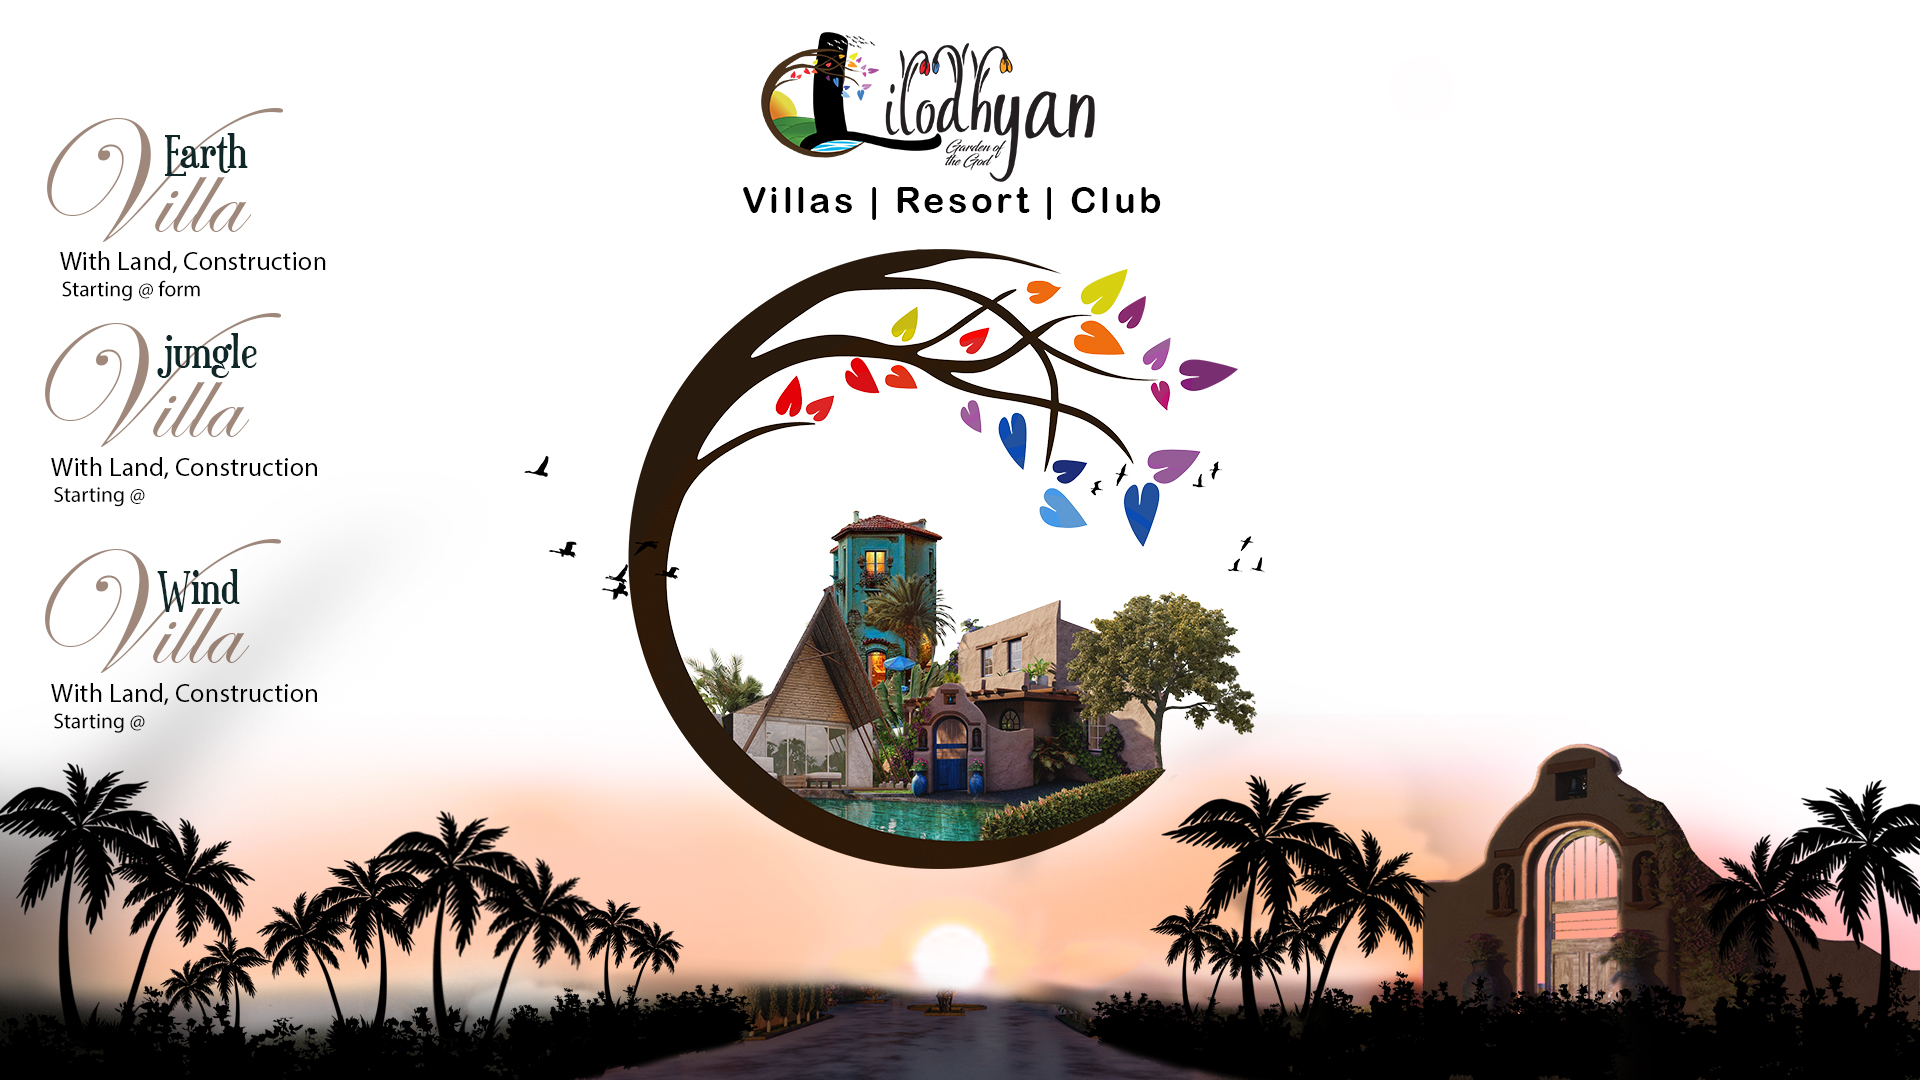 lilodhayan villa resort club